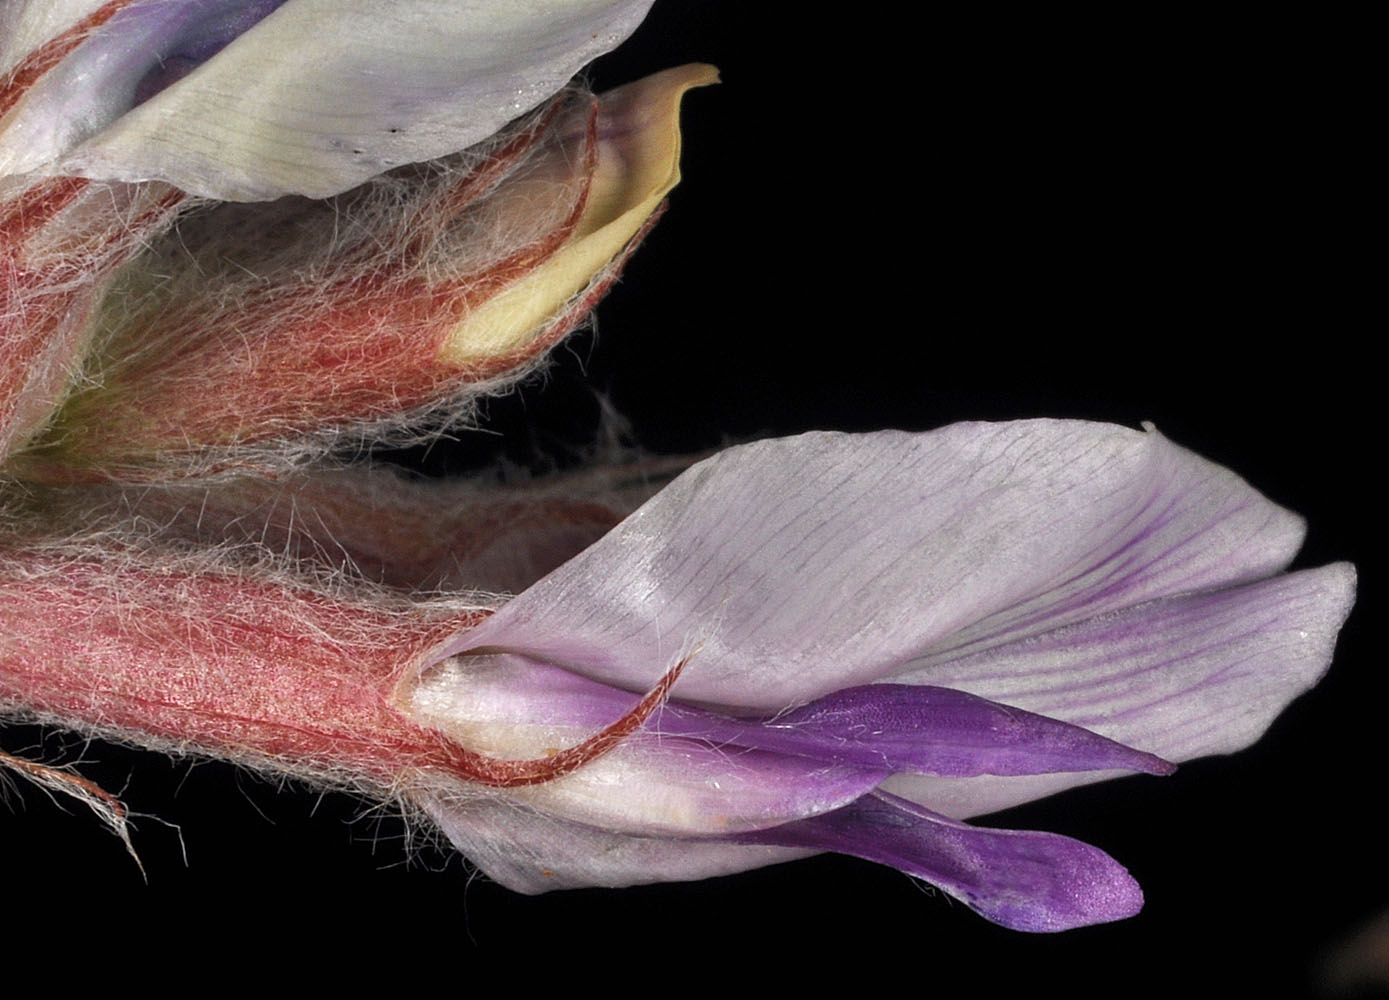 Flora of Eastern Washington Image: Astragalus inflexus